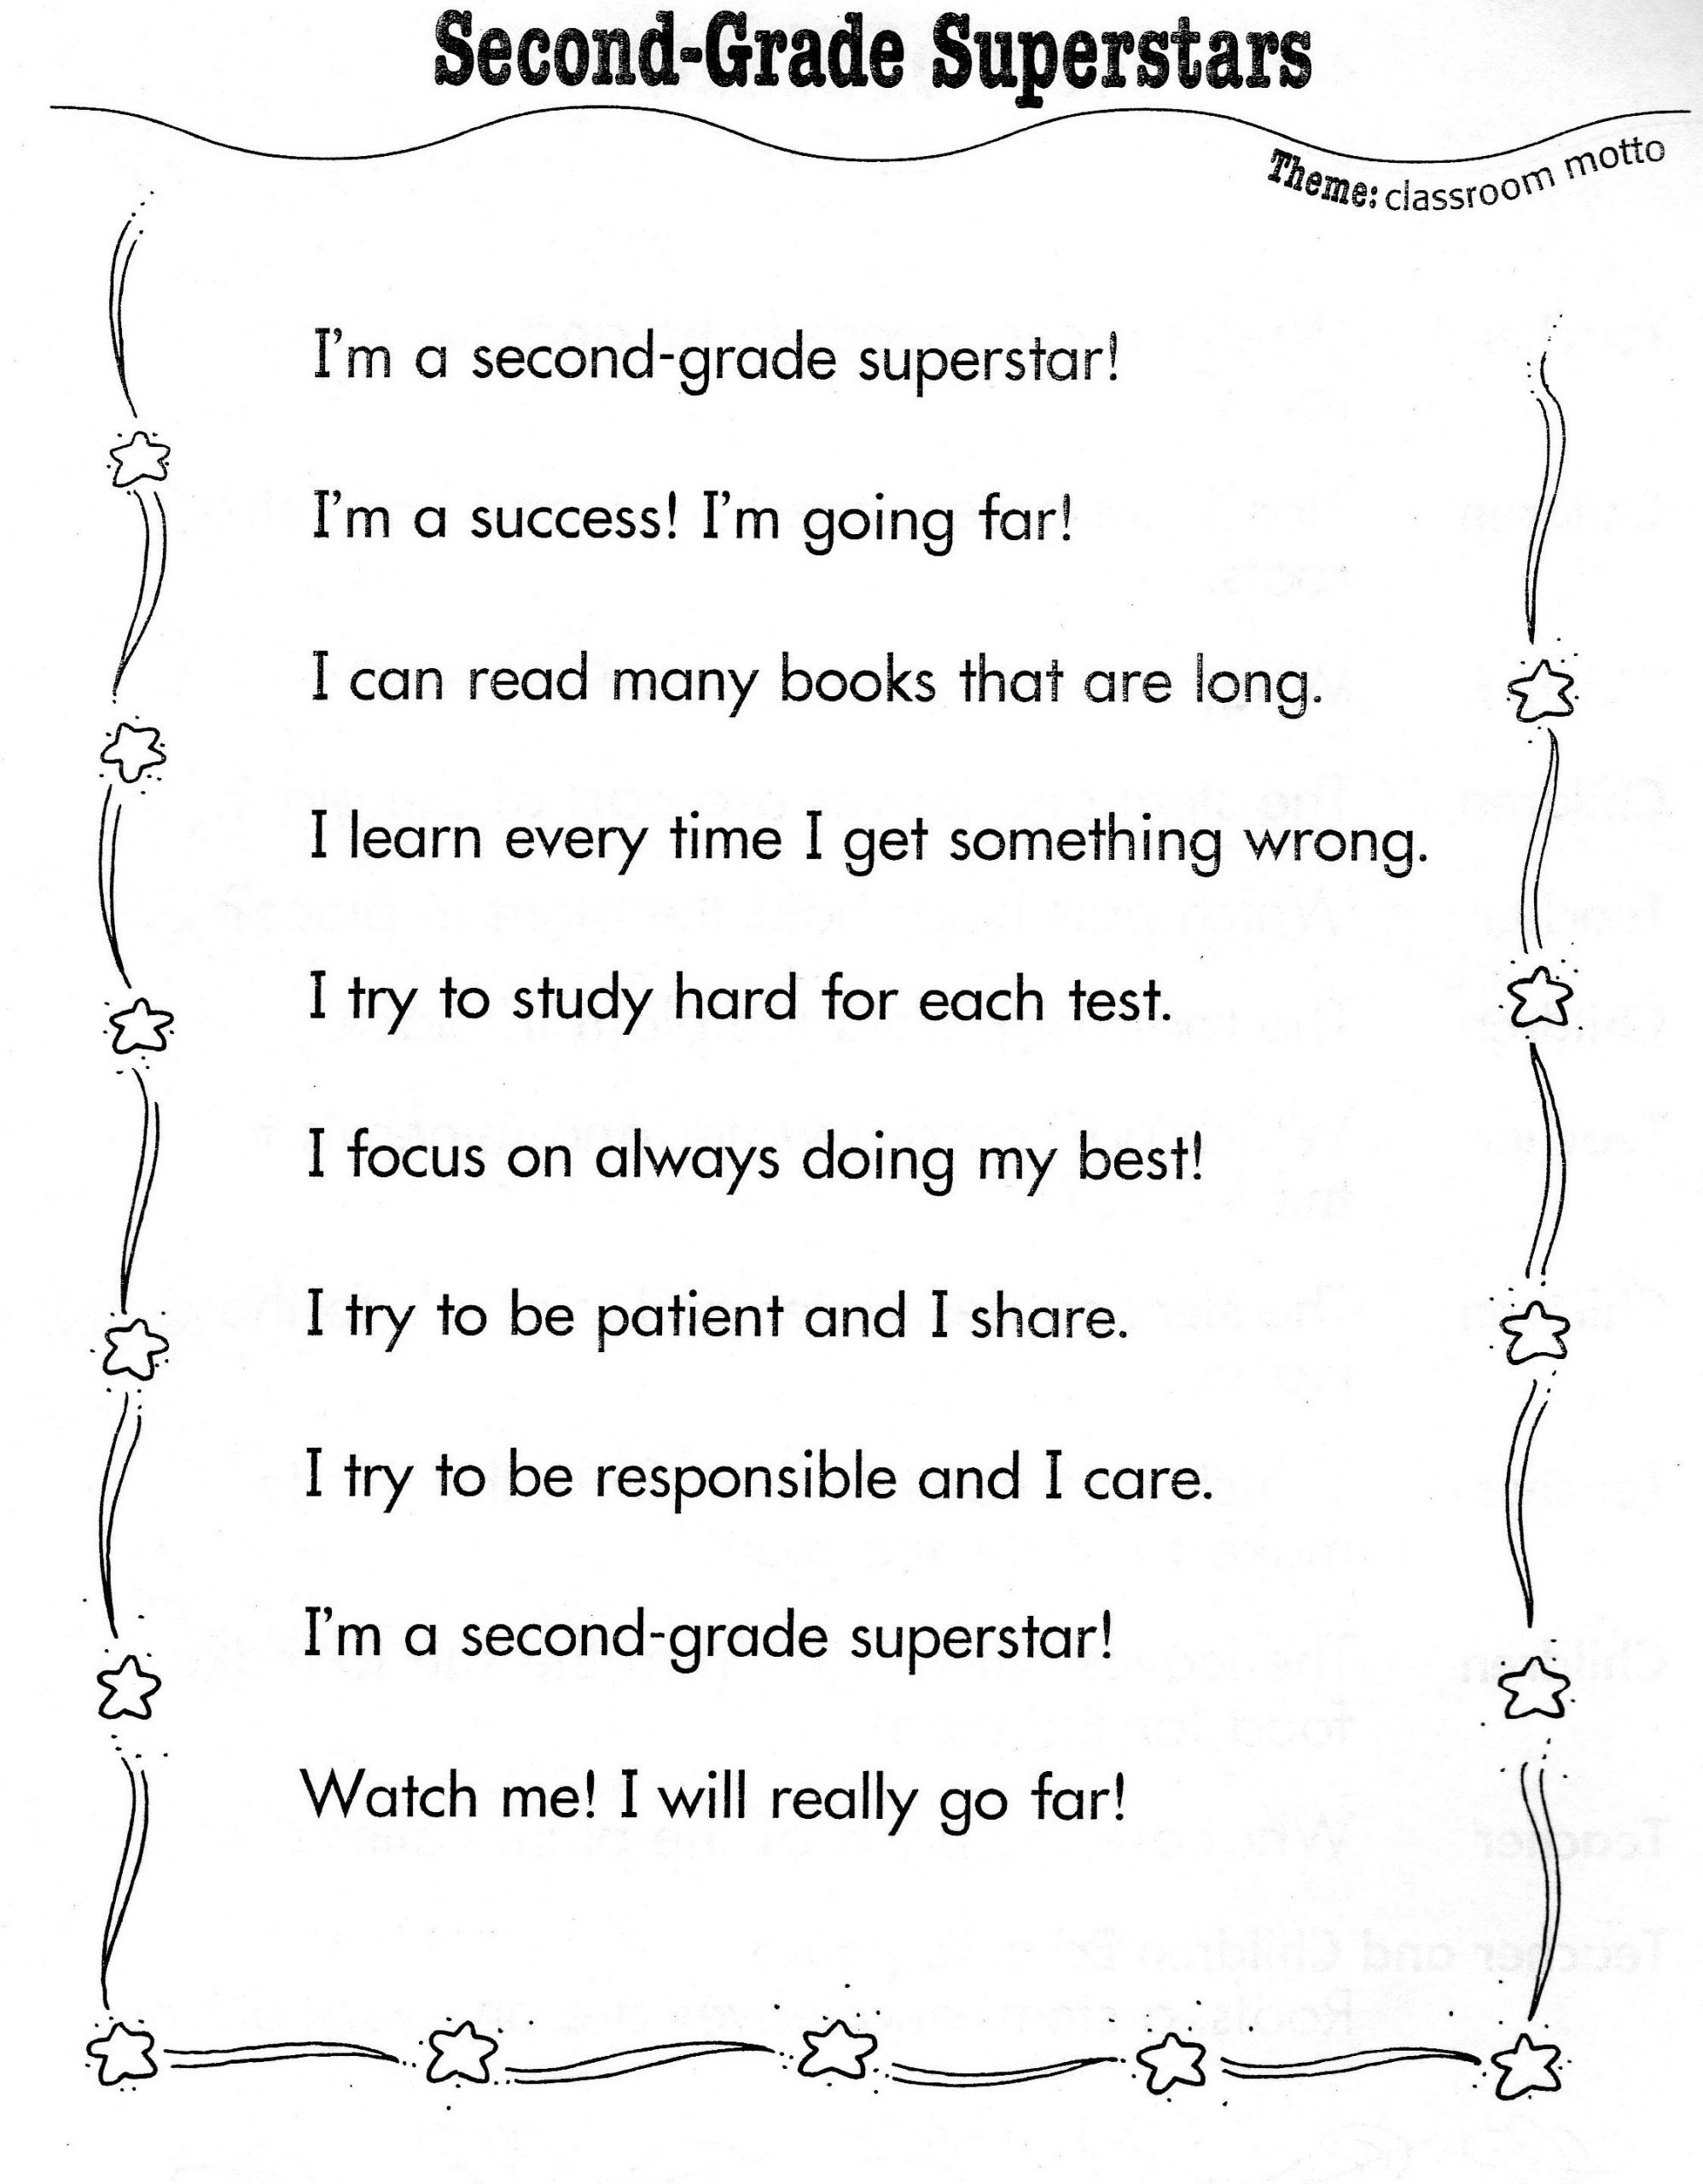 2Nd Grade Superstars Poem | Study Hard, Teaching, Spring Poem